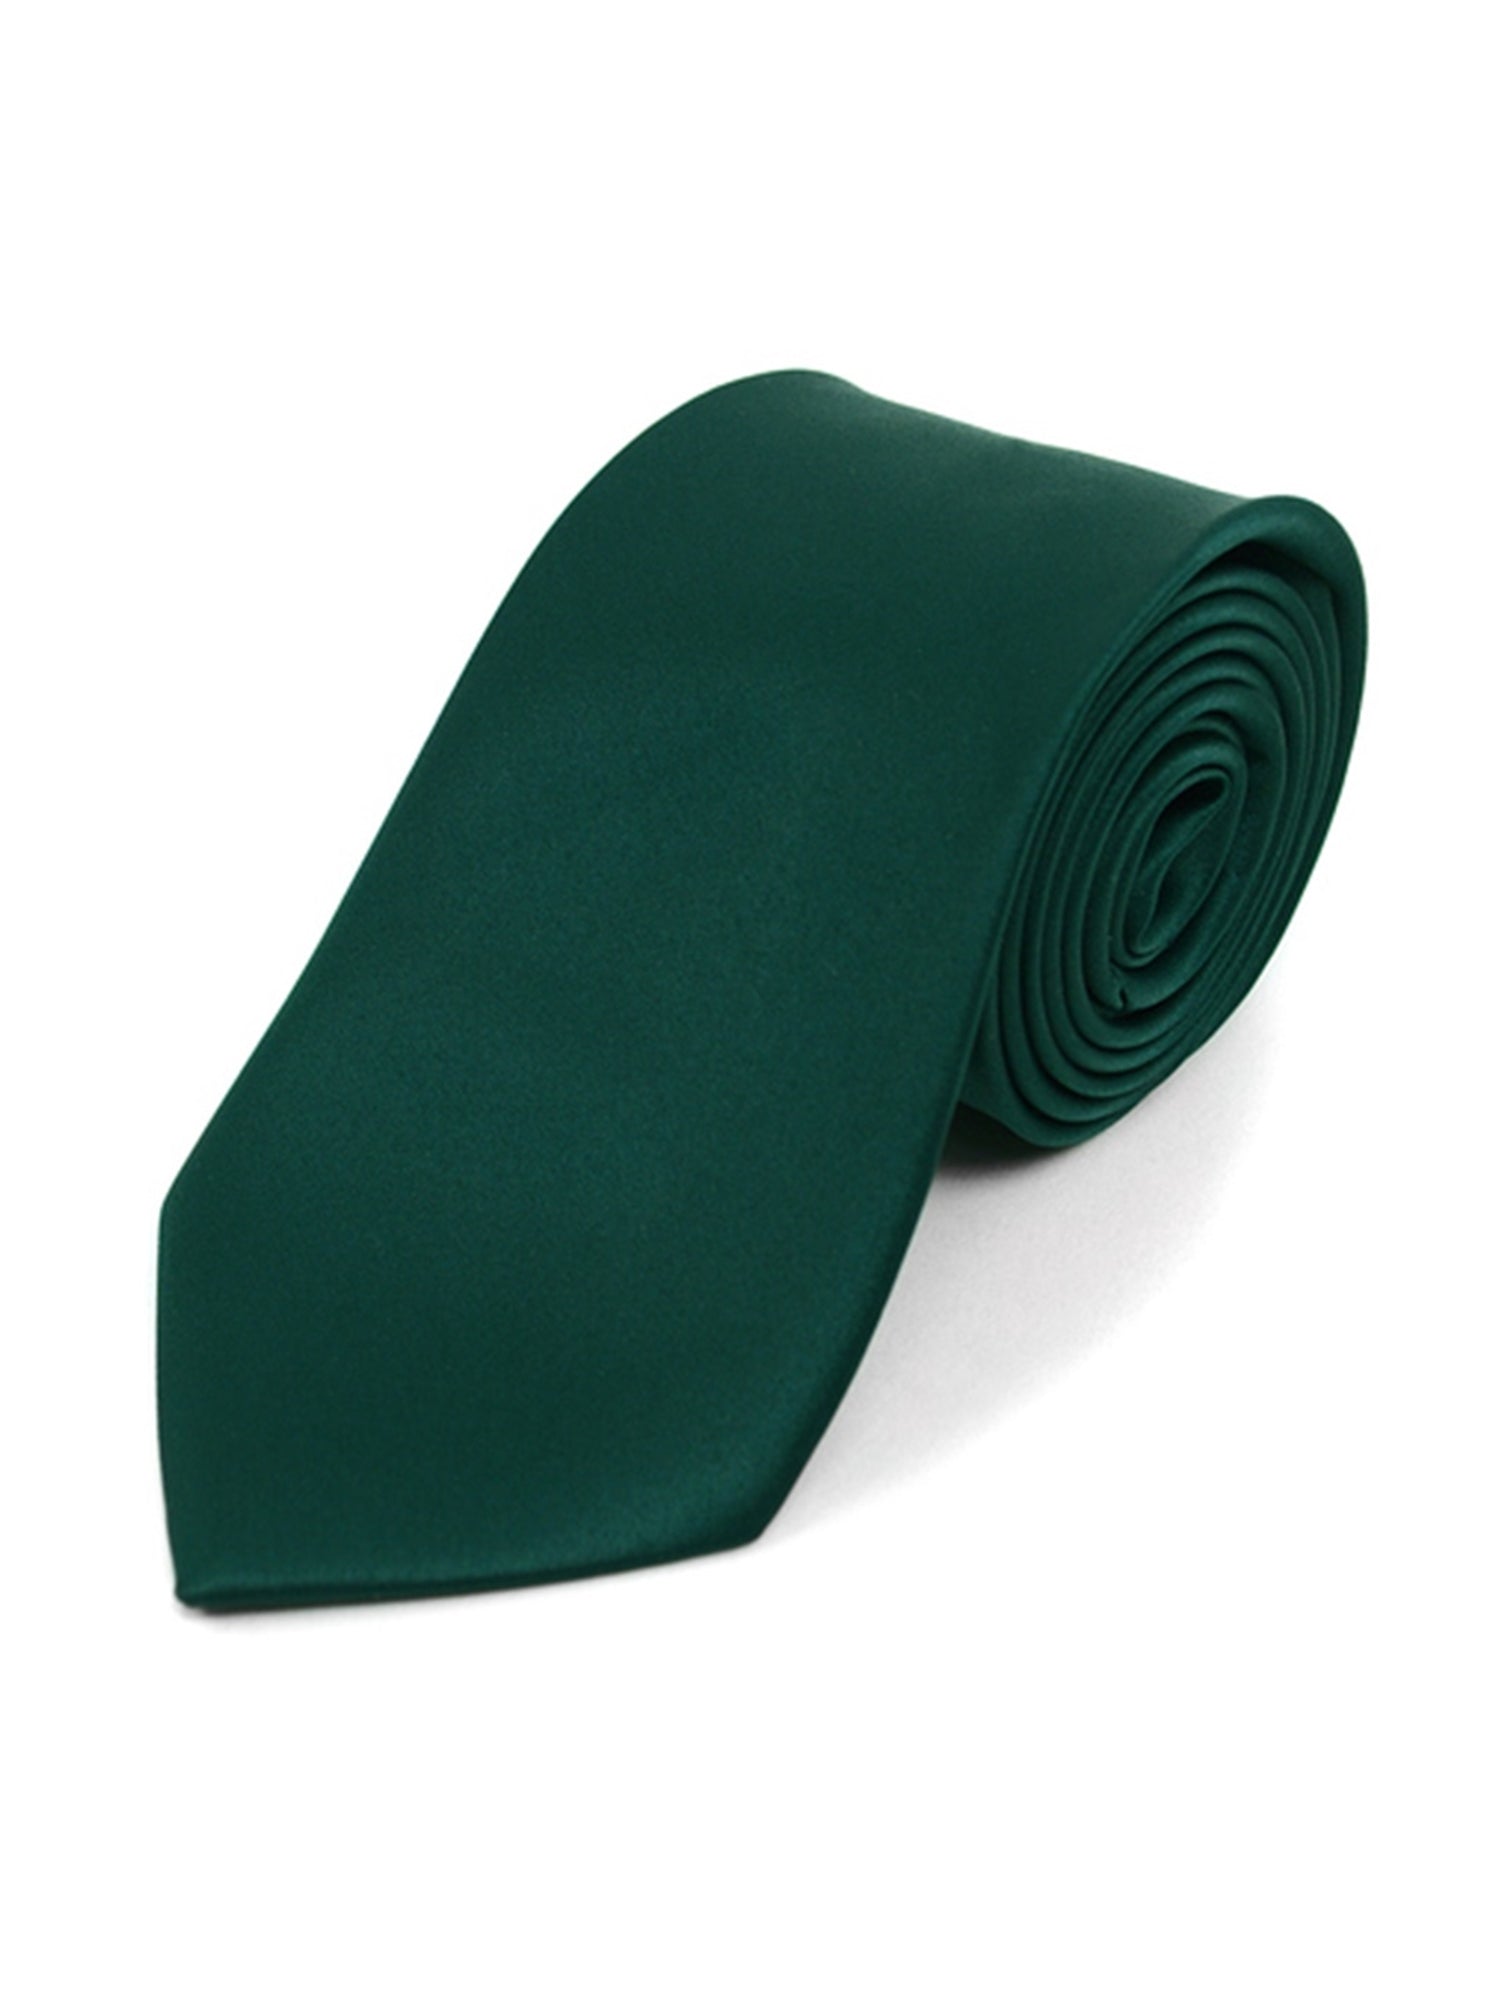 Boy's Age 12-18 Solid Color Poly Neck Tie Boy's Solid Color Neck Tie TheDapperTie Hunter Green 49" 